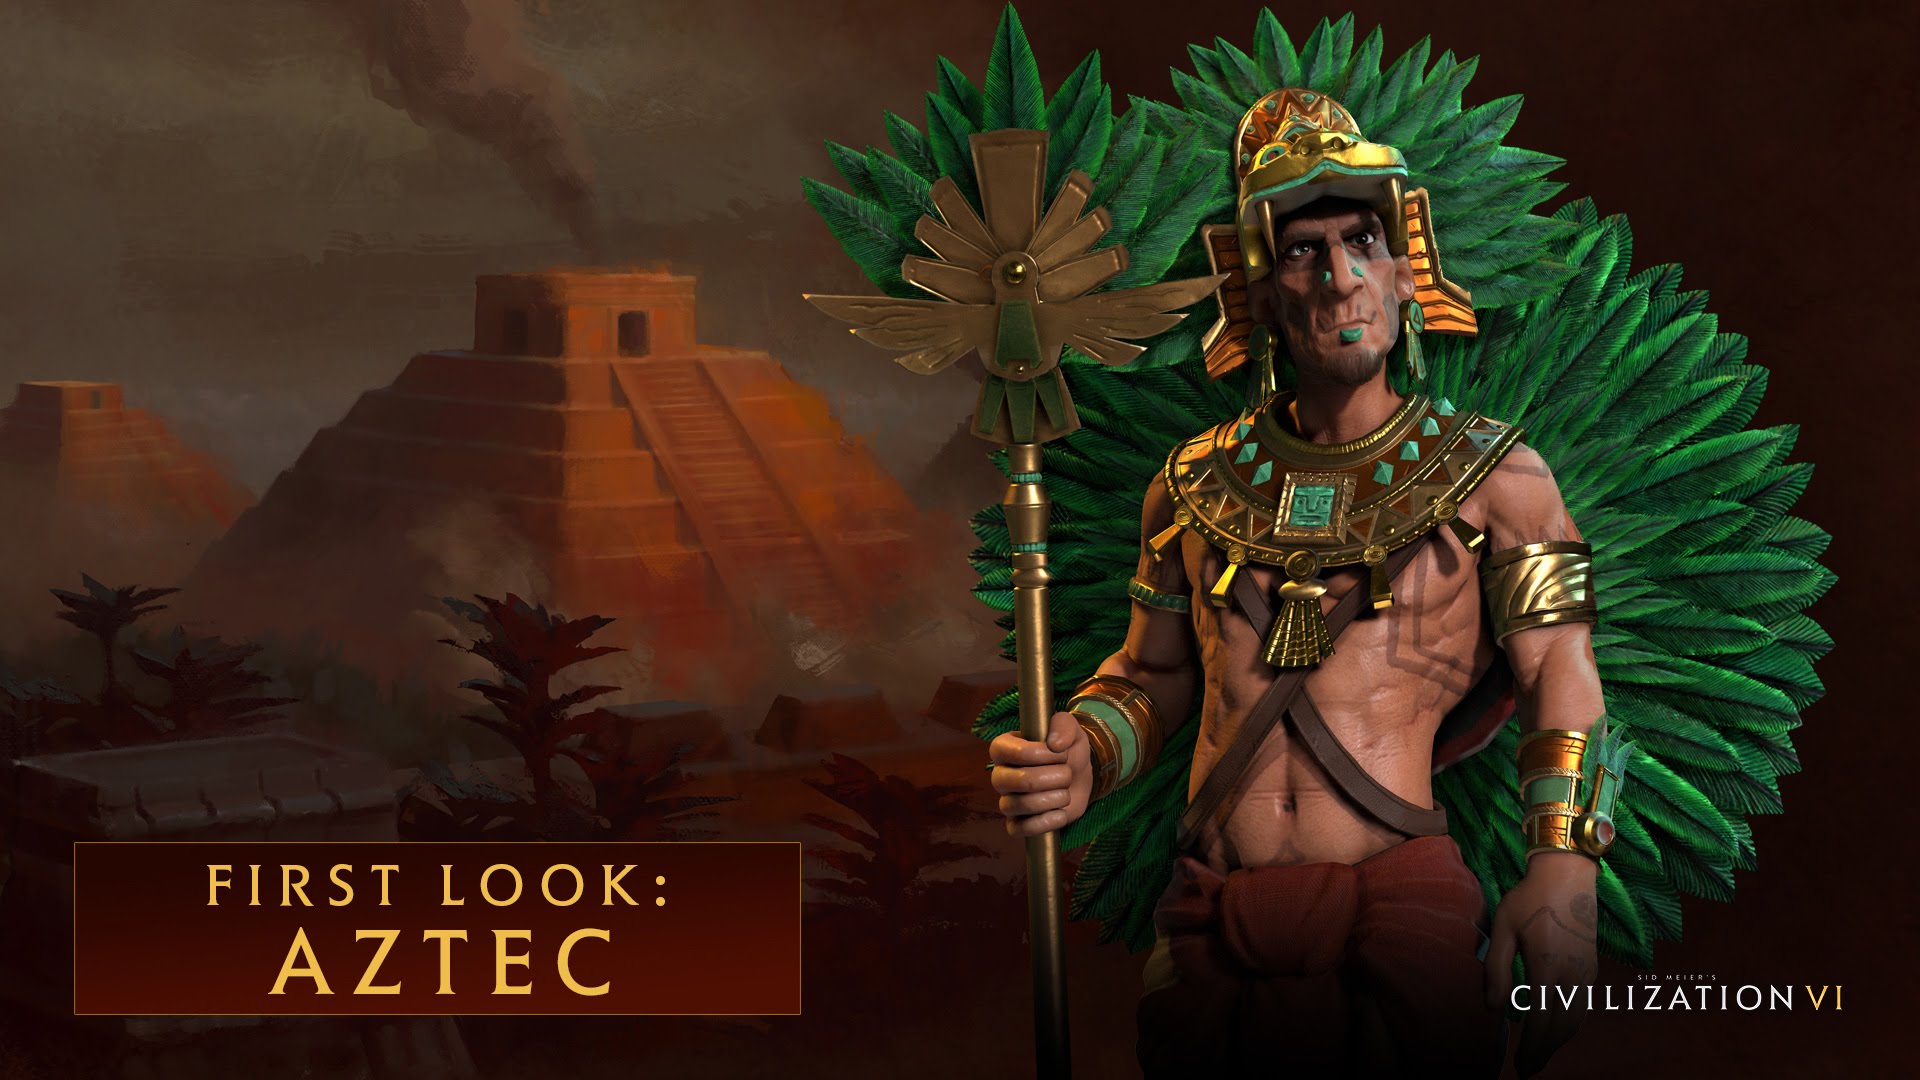 CIVILIZATION VI - First Look: Aztec